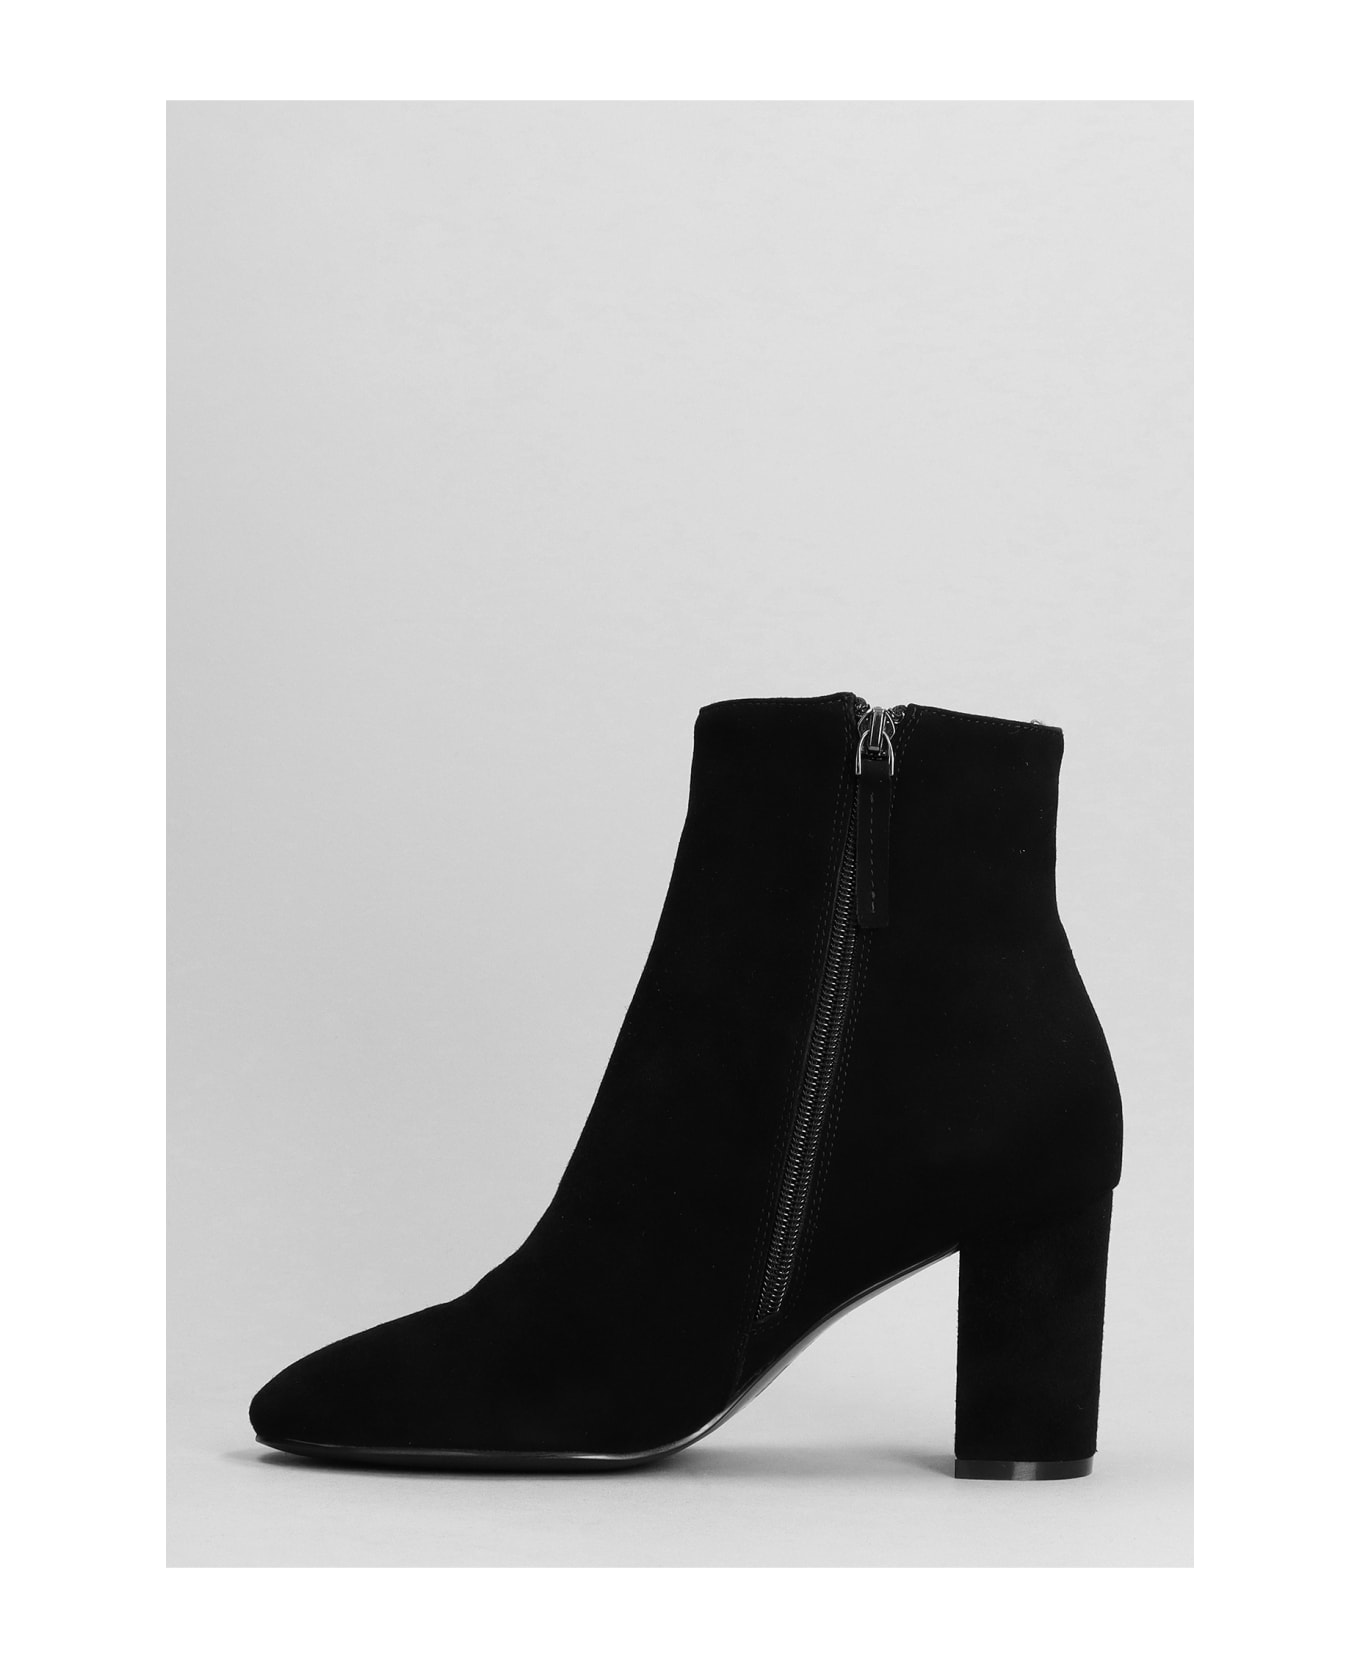 Bibi Lou High Heels Ankle Boots In Black Suede - black